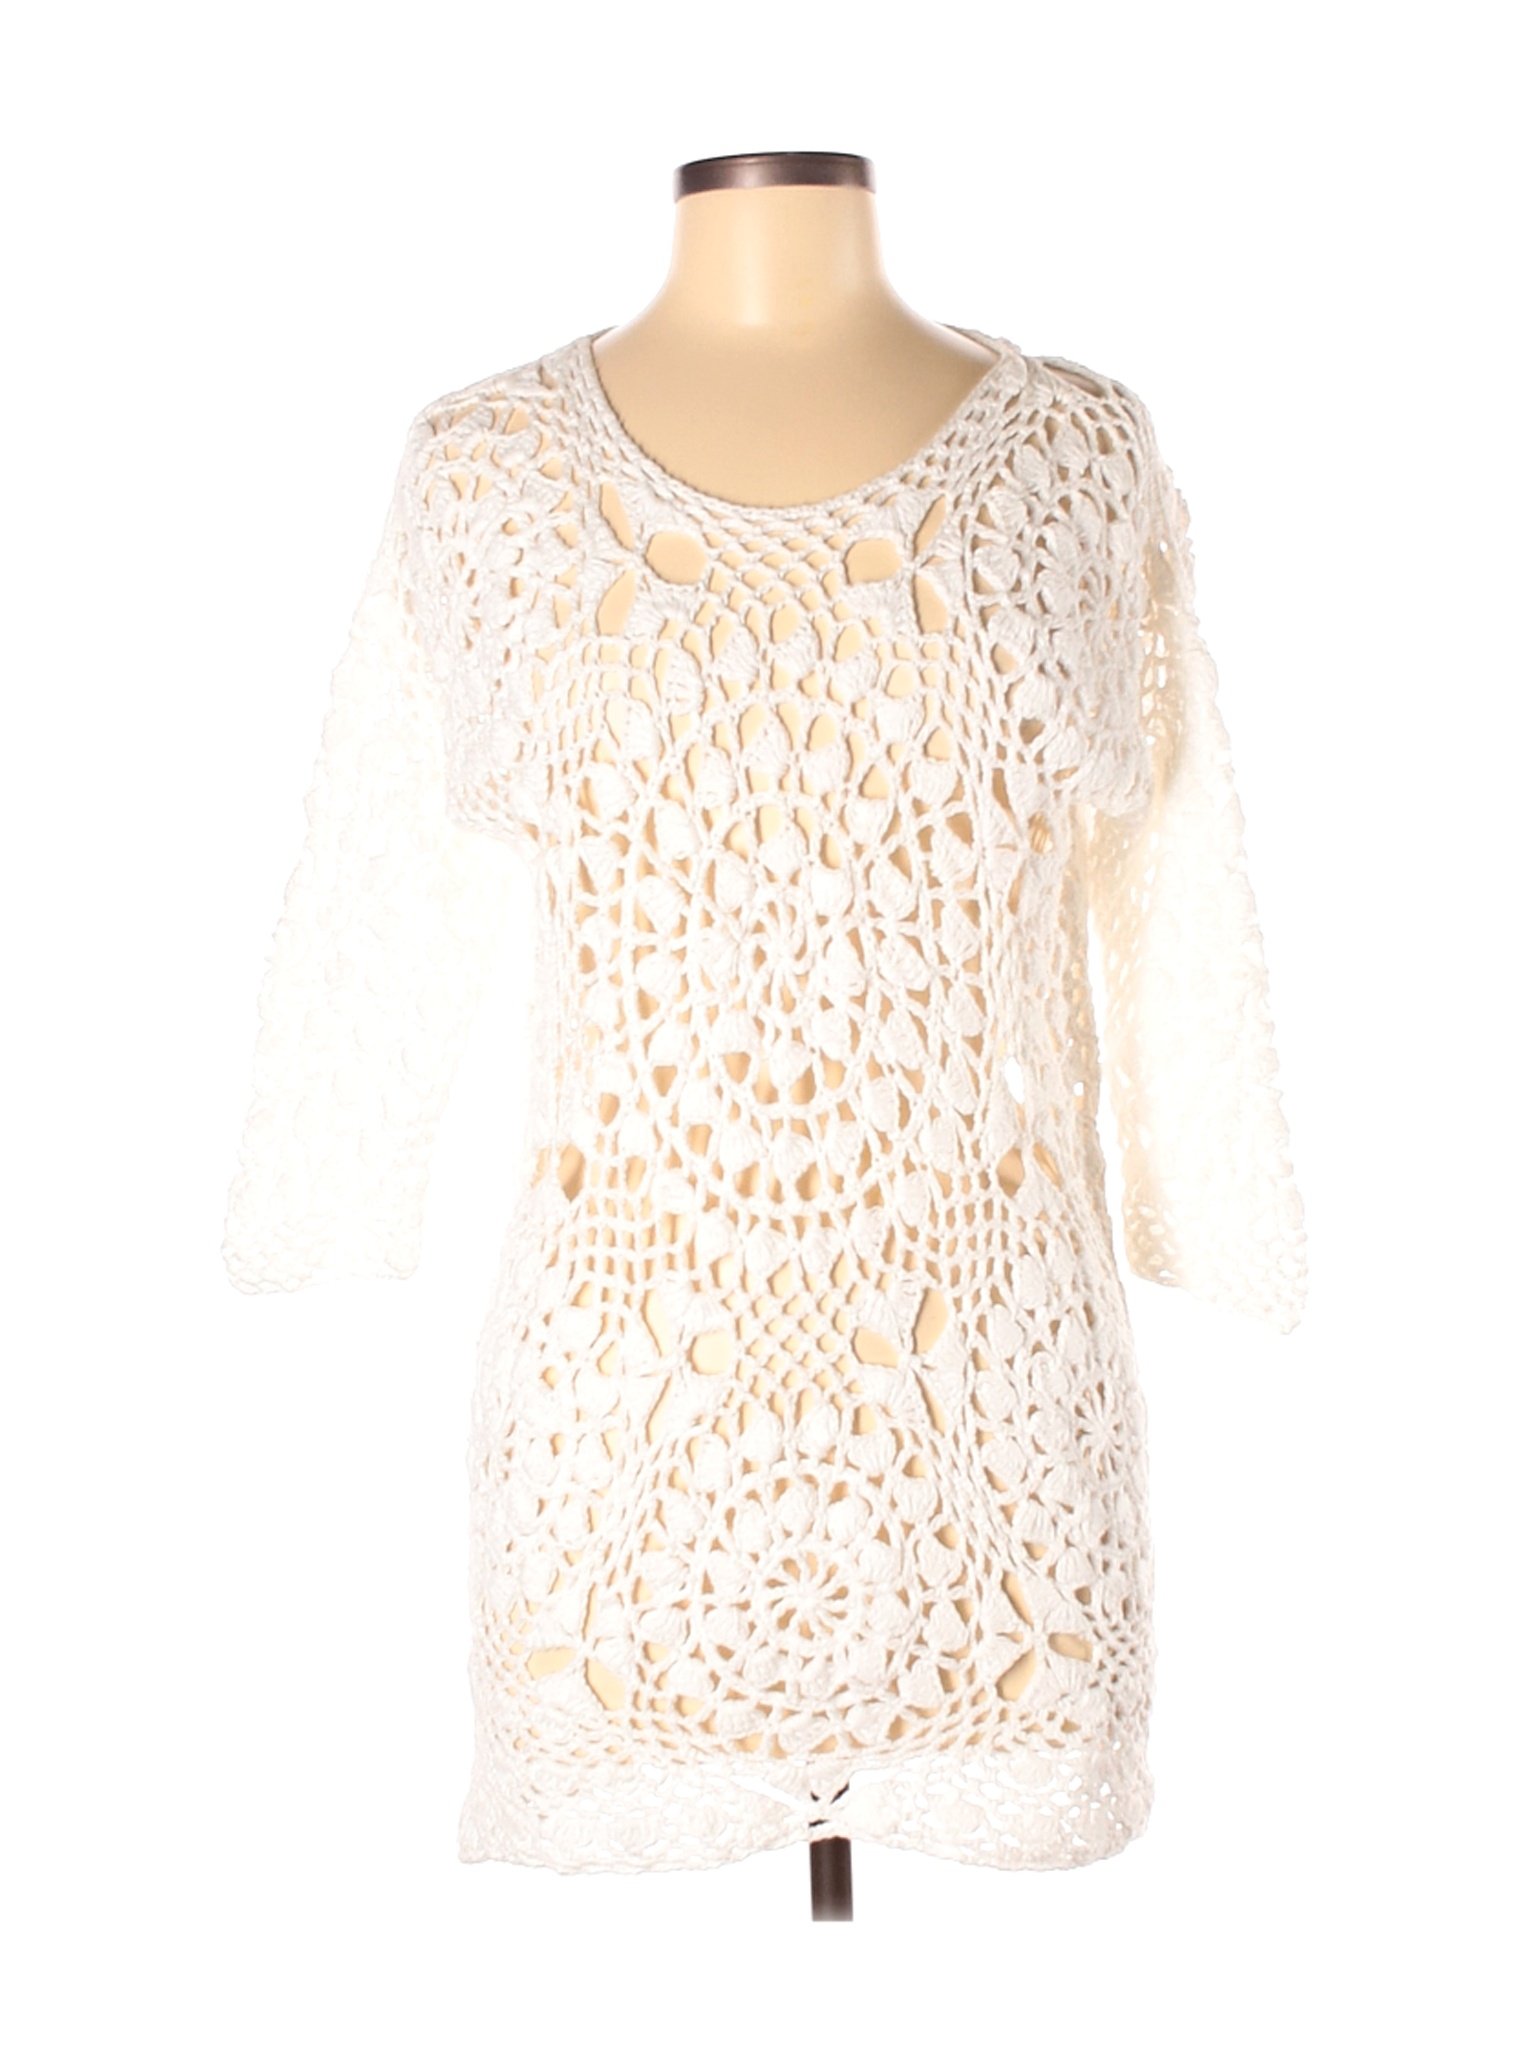 PURE HANDKNIT Women Ivory Pullover Sweater M | eBay